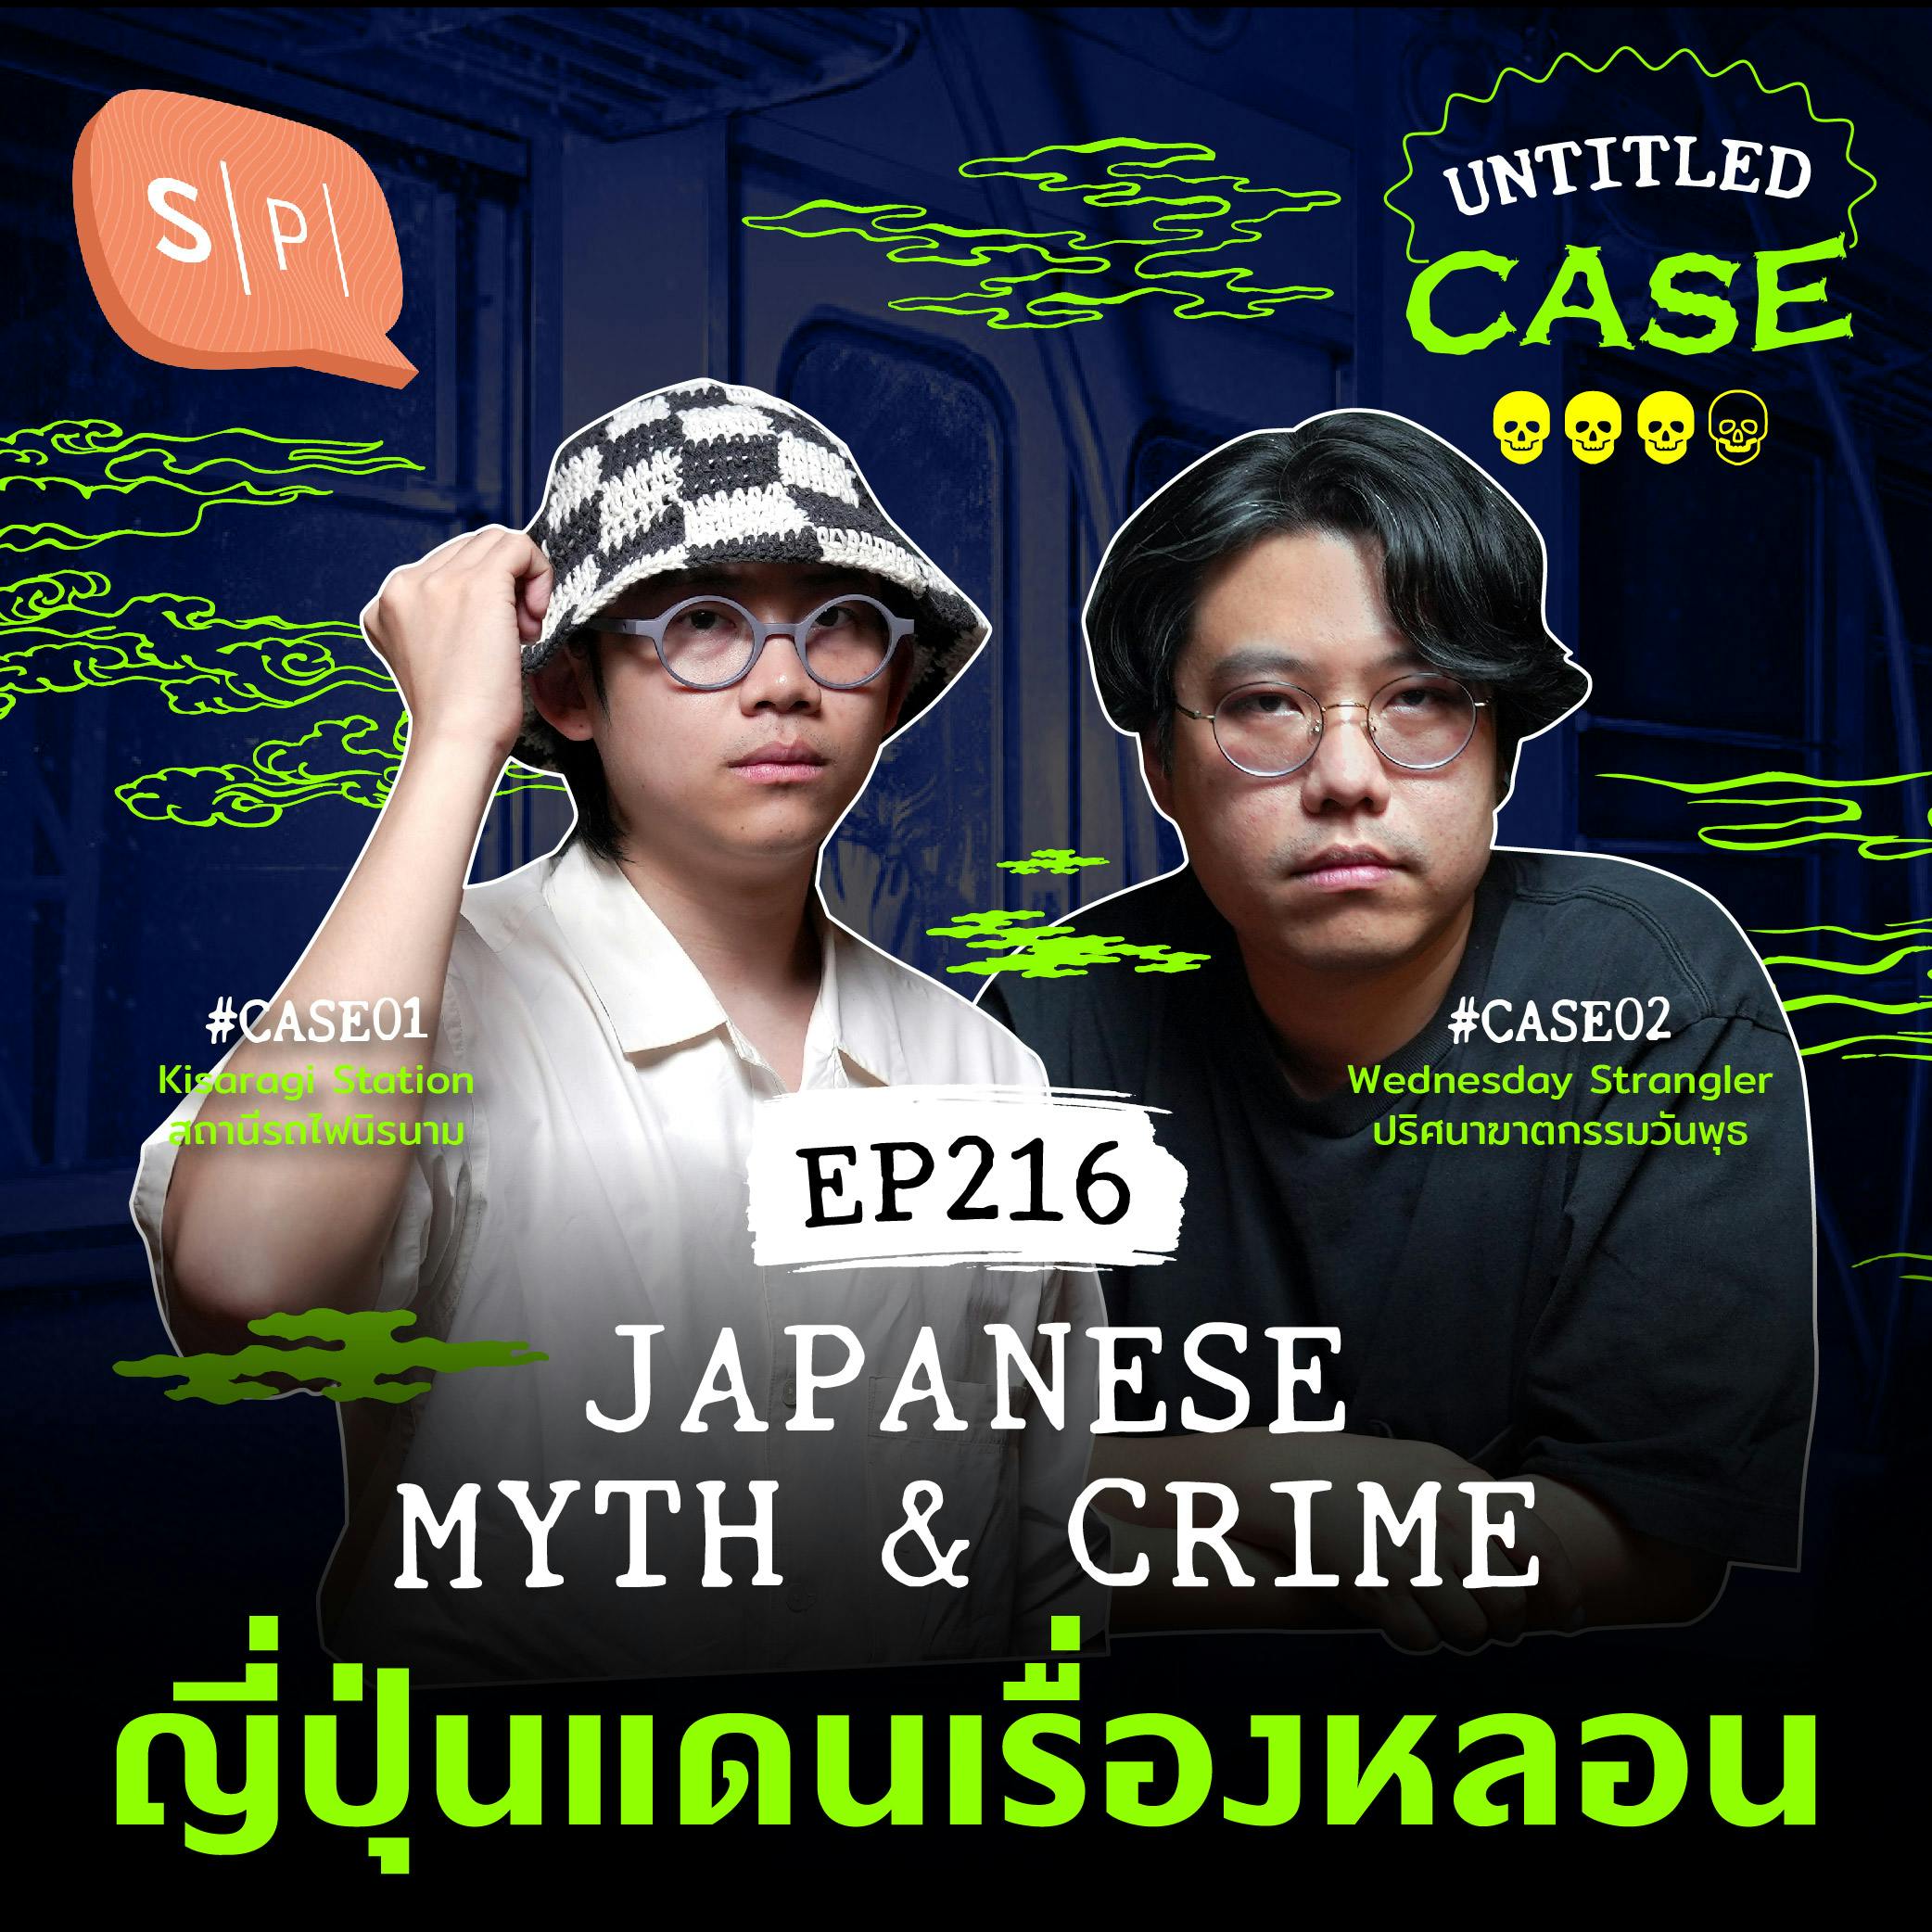 Japanese Myth & Crime ญี่ปุ่นแดนเรื่องหลอน | Untitled Case EP216